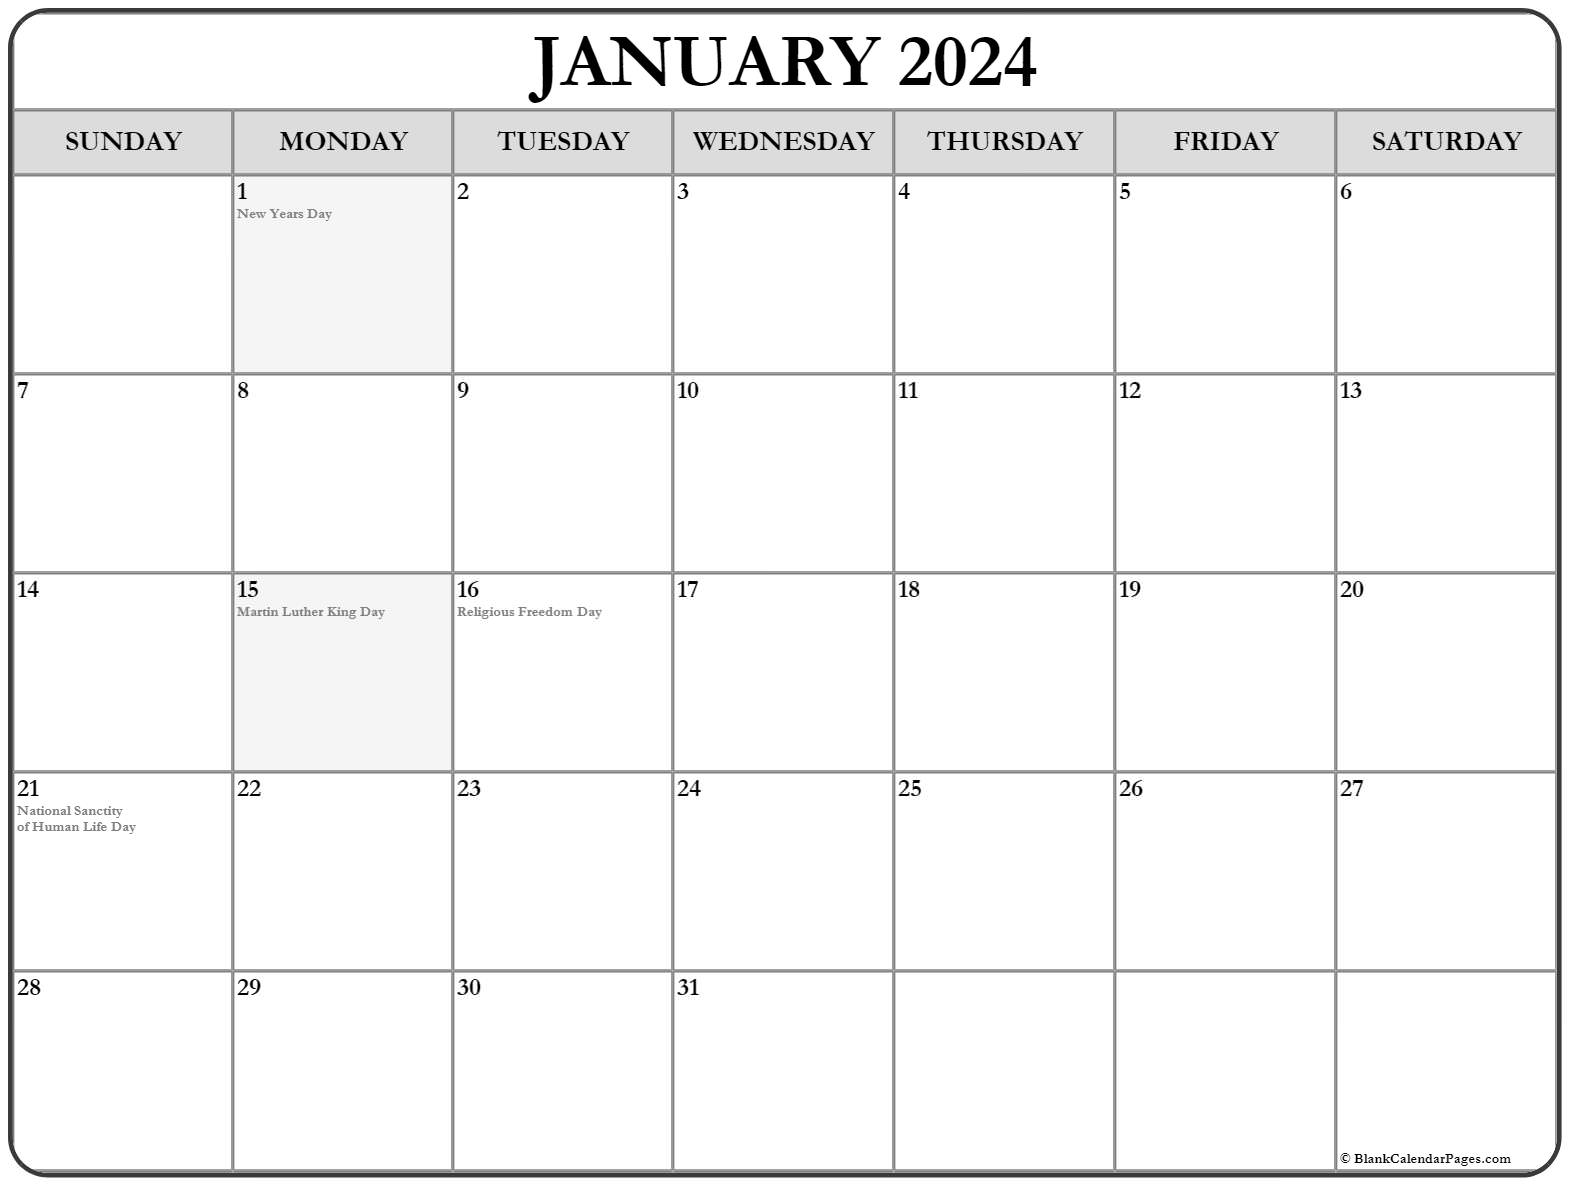 January 2022 calendar with holidays